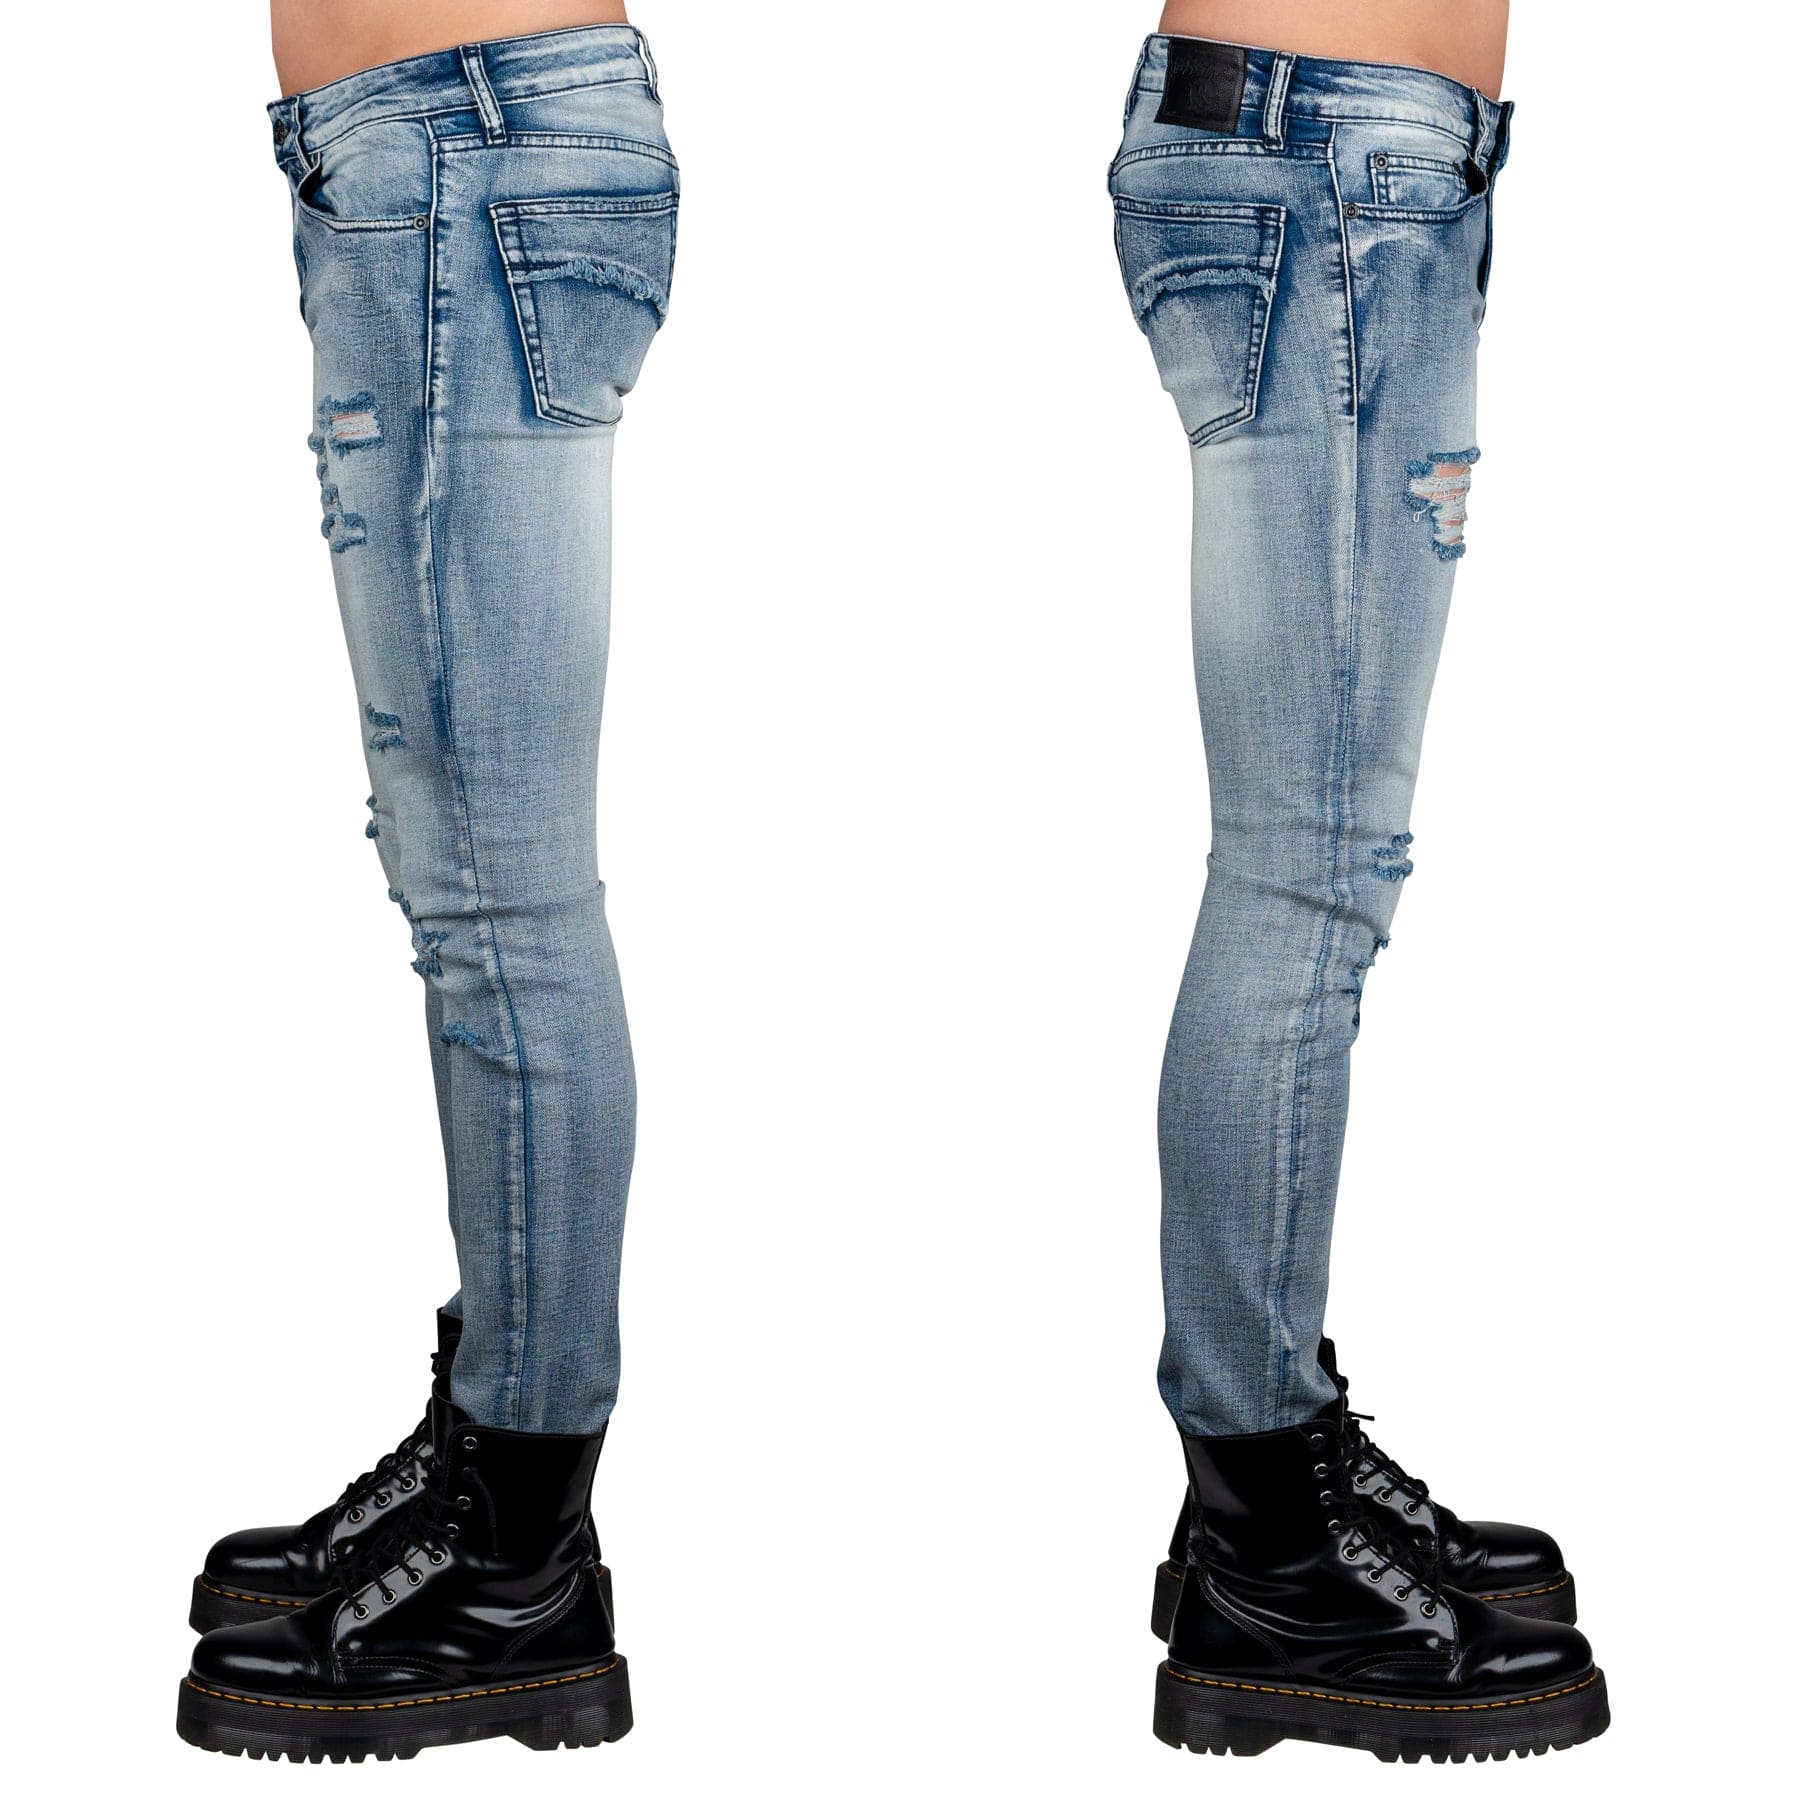 Wornstar Clothing Mens Jeans. Rampager Shredded Denim Jeans - Classic Blue